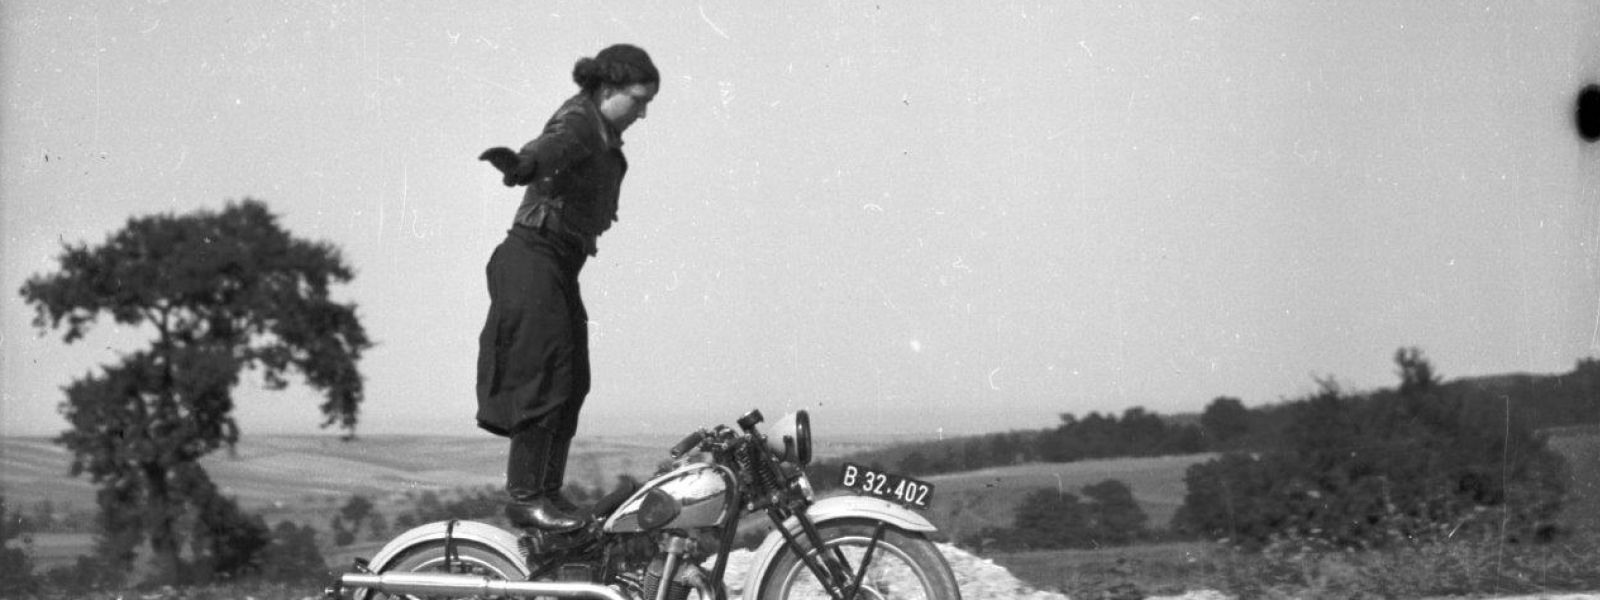 Anny Deim: Kunstfahren am Motorrad, 1935

